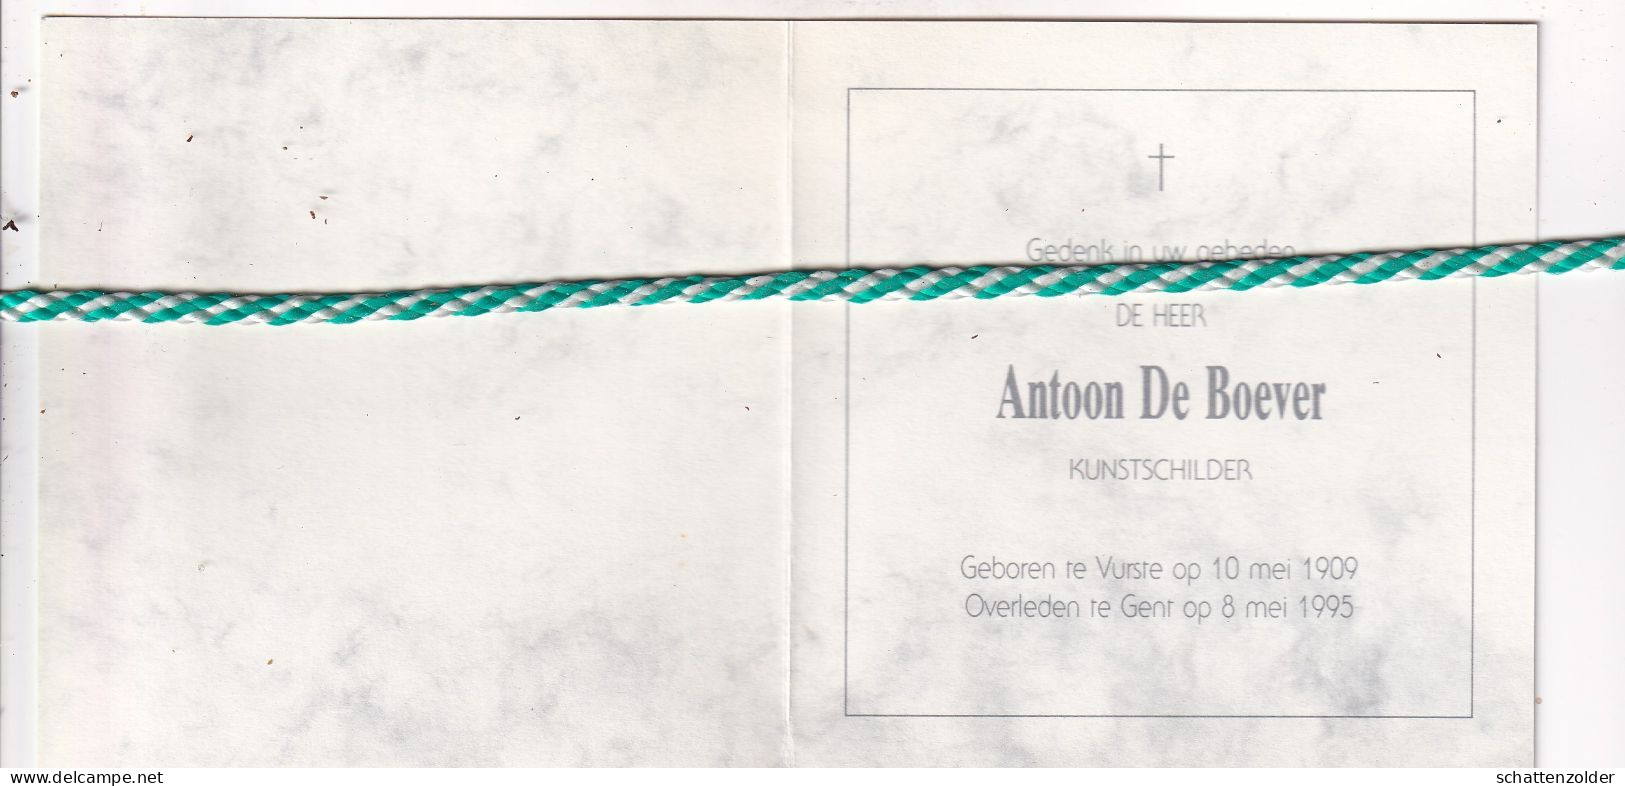 Antoon De Boever, Vurste 1909, Gent 1995. Kunsschilder - Décès